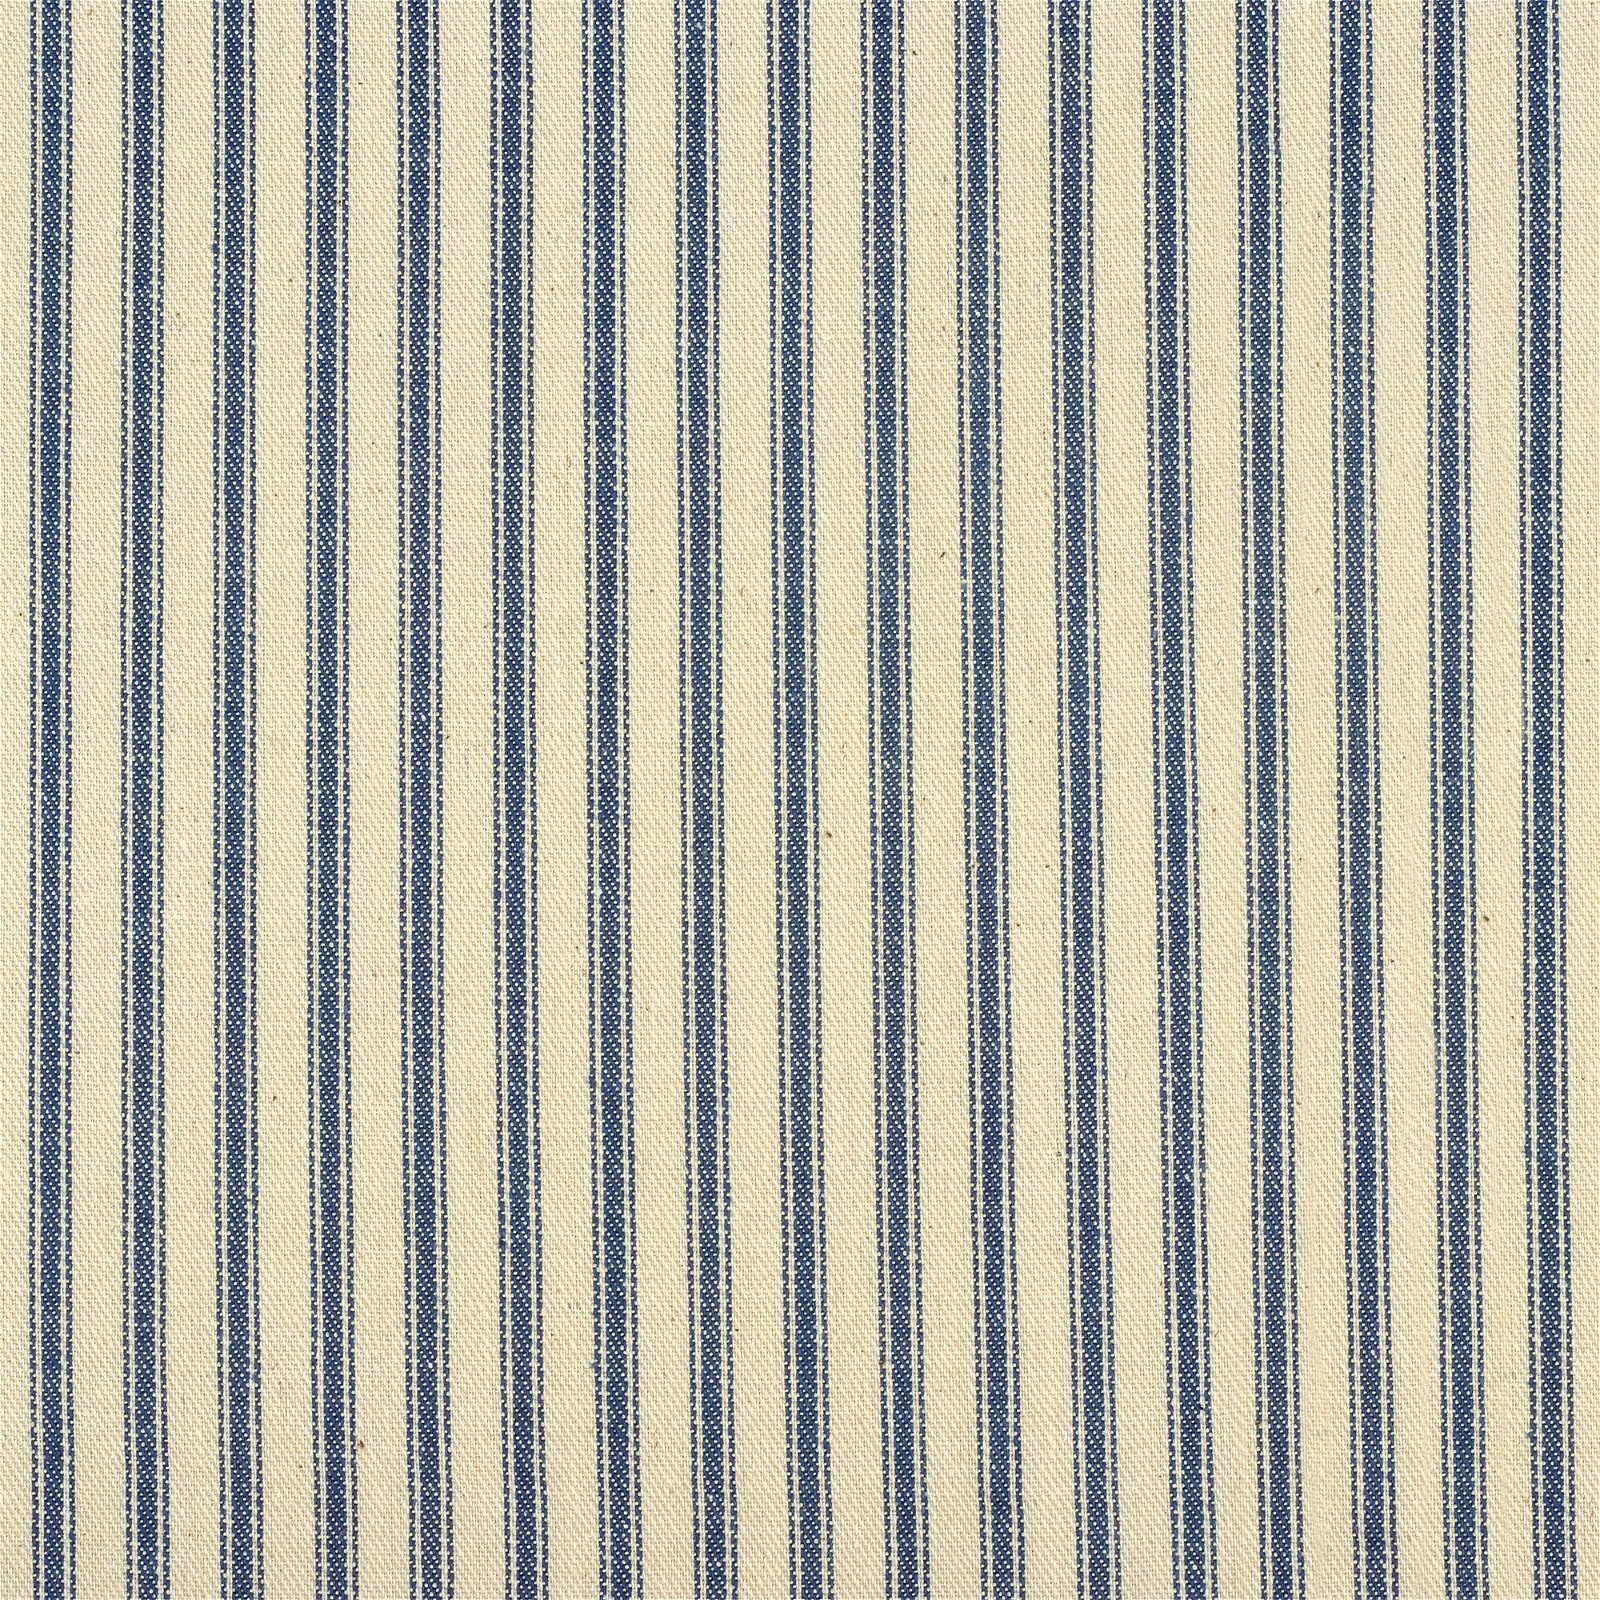 Covington Denim Blue Woven Ticking Fabric